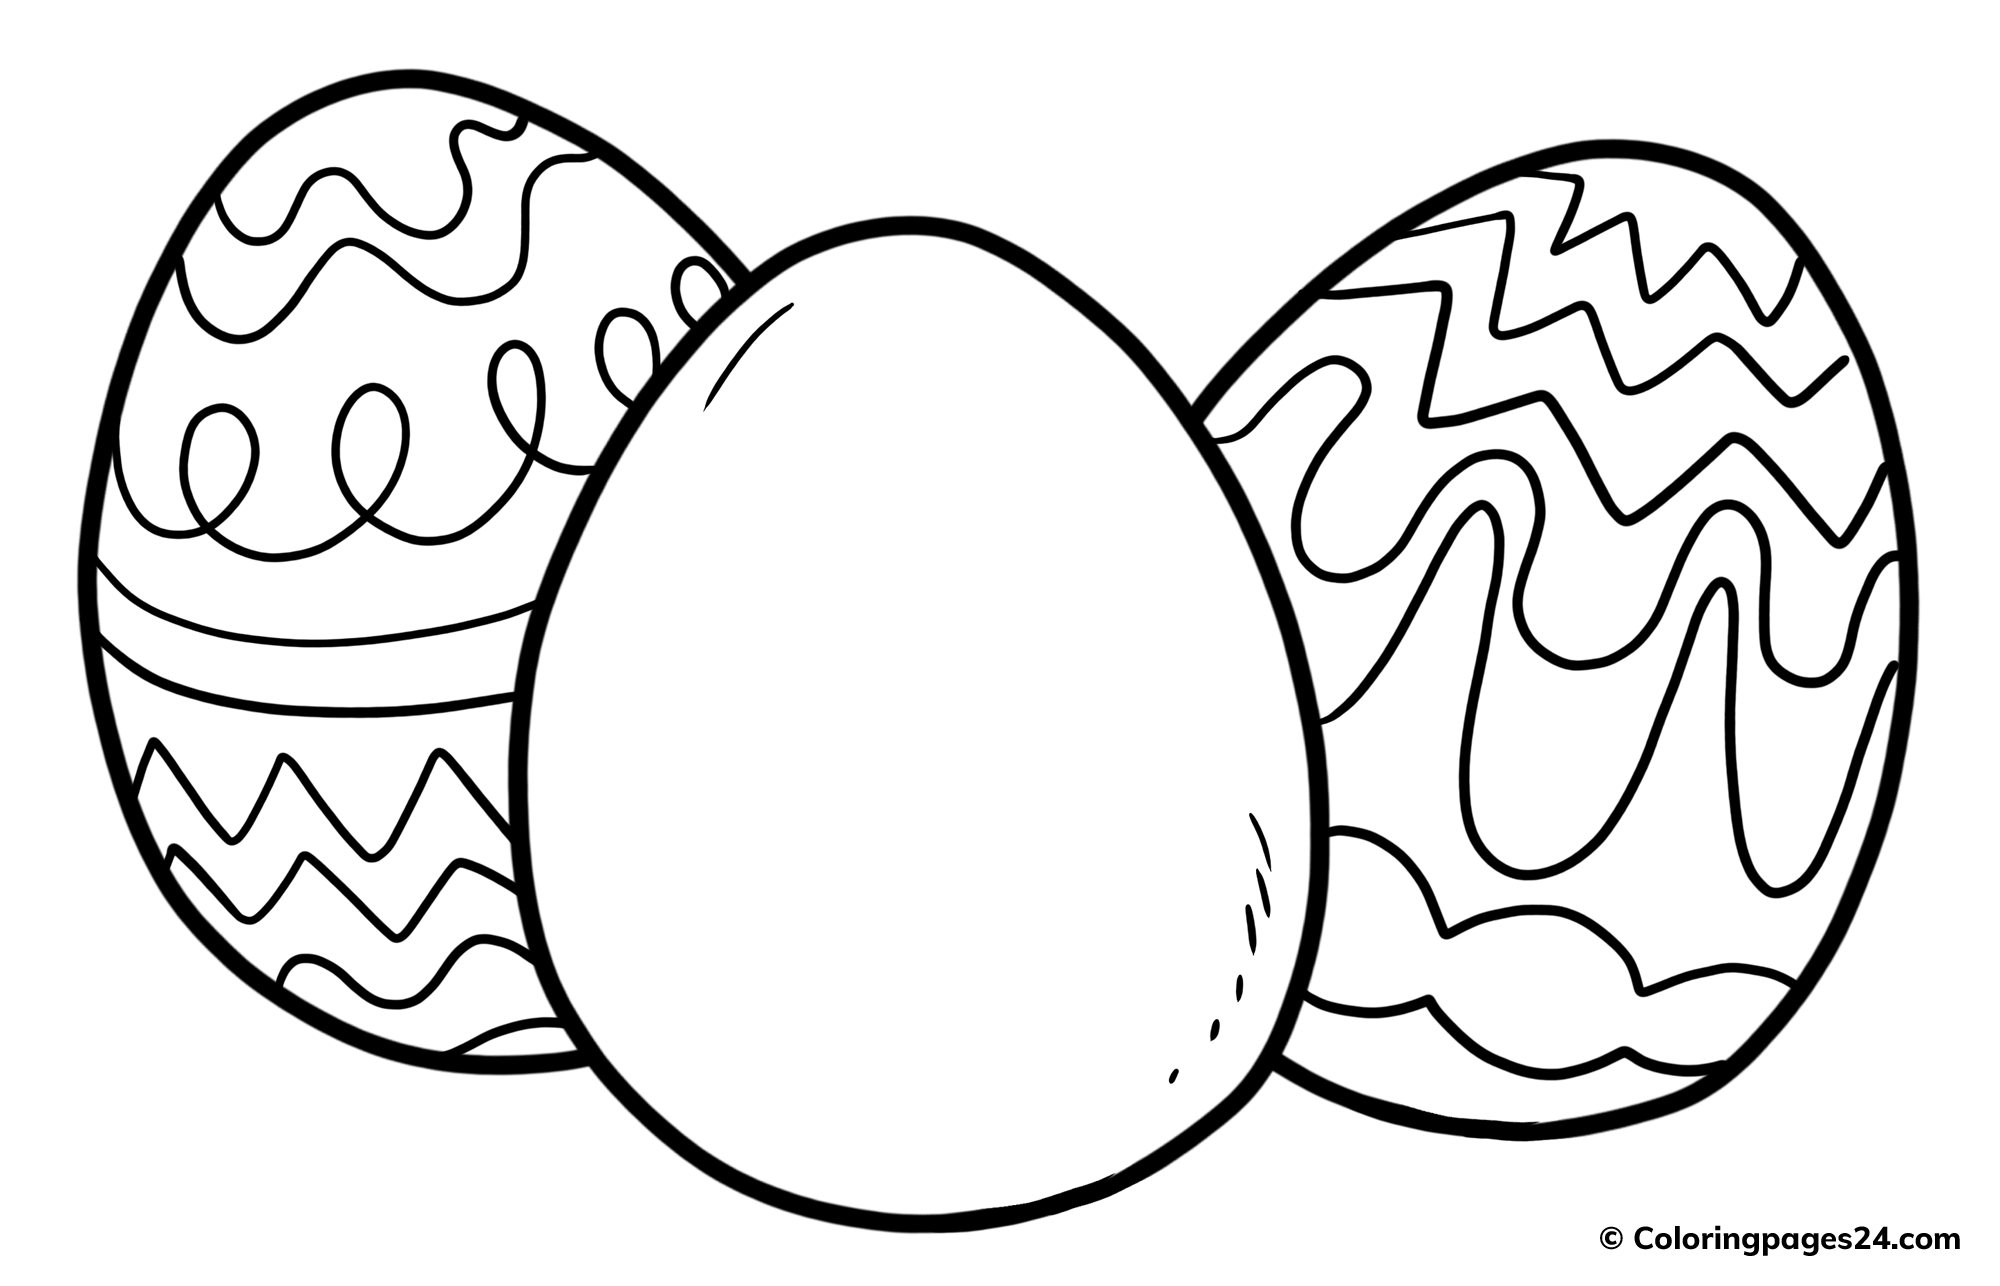 Three large Easter eggs